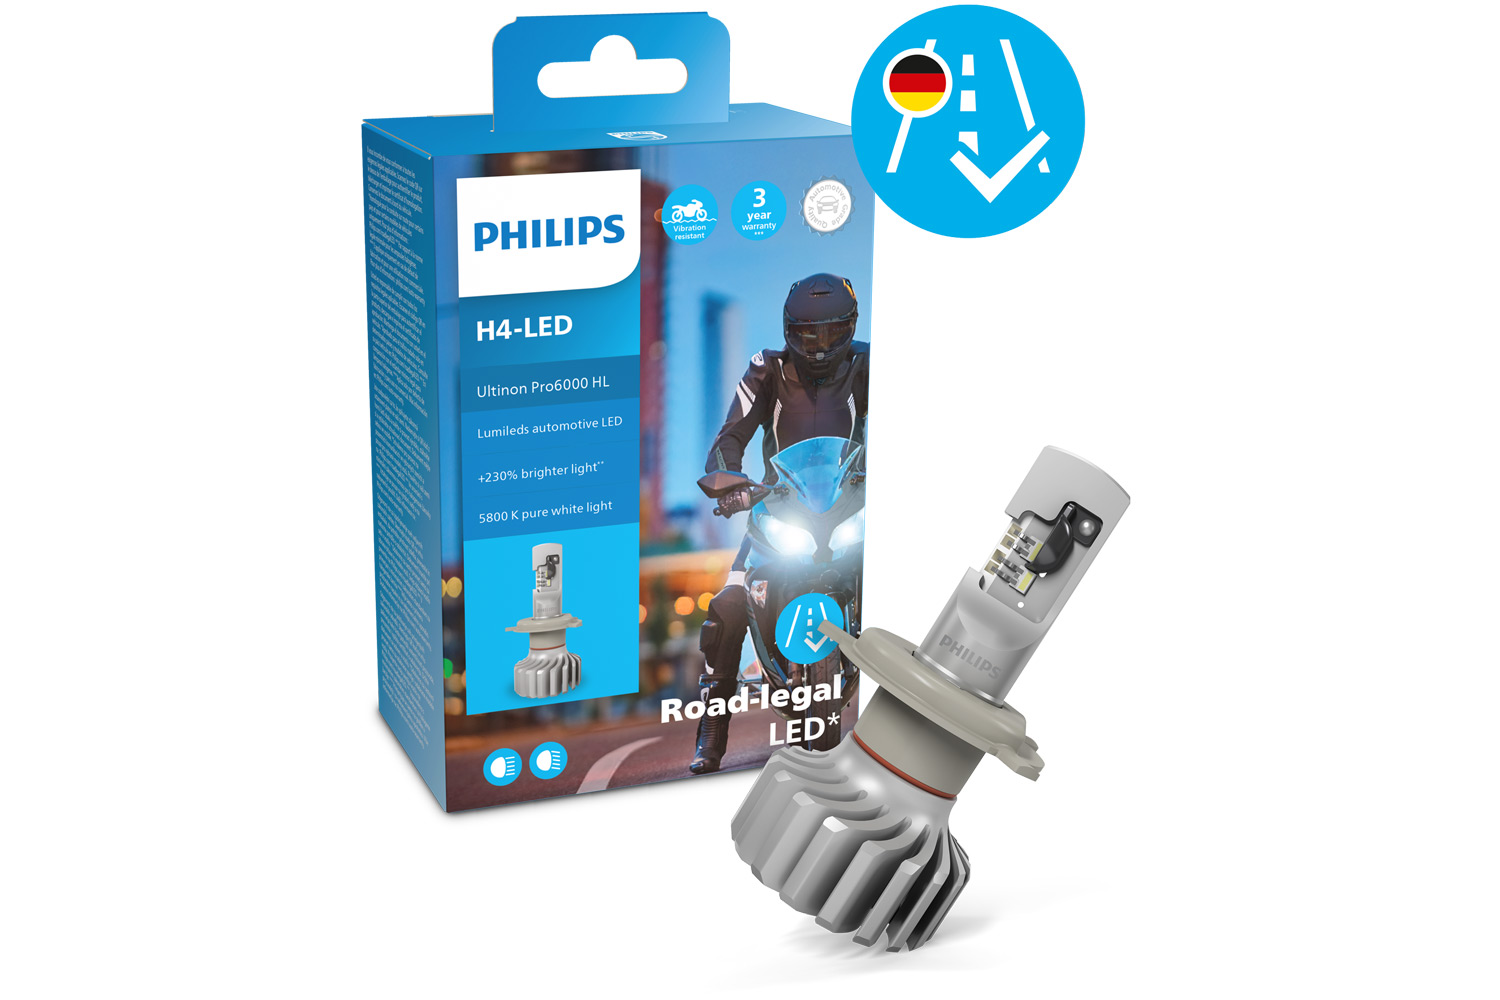 H4 Philips Ultinon Pro6000 LED headlight bulb